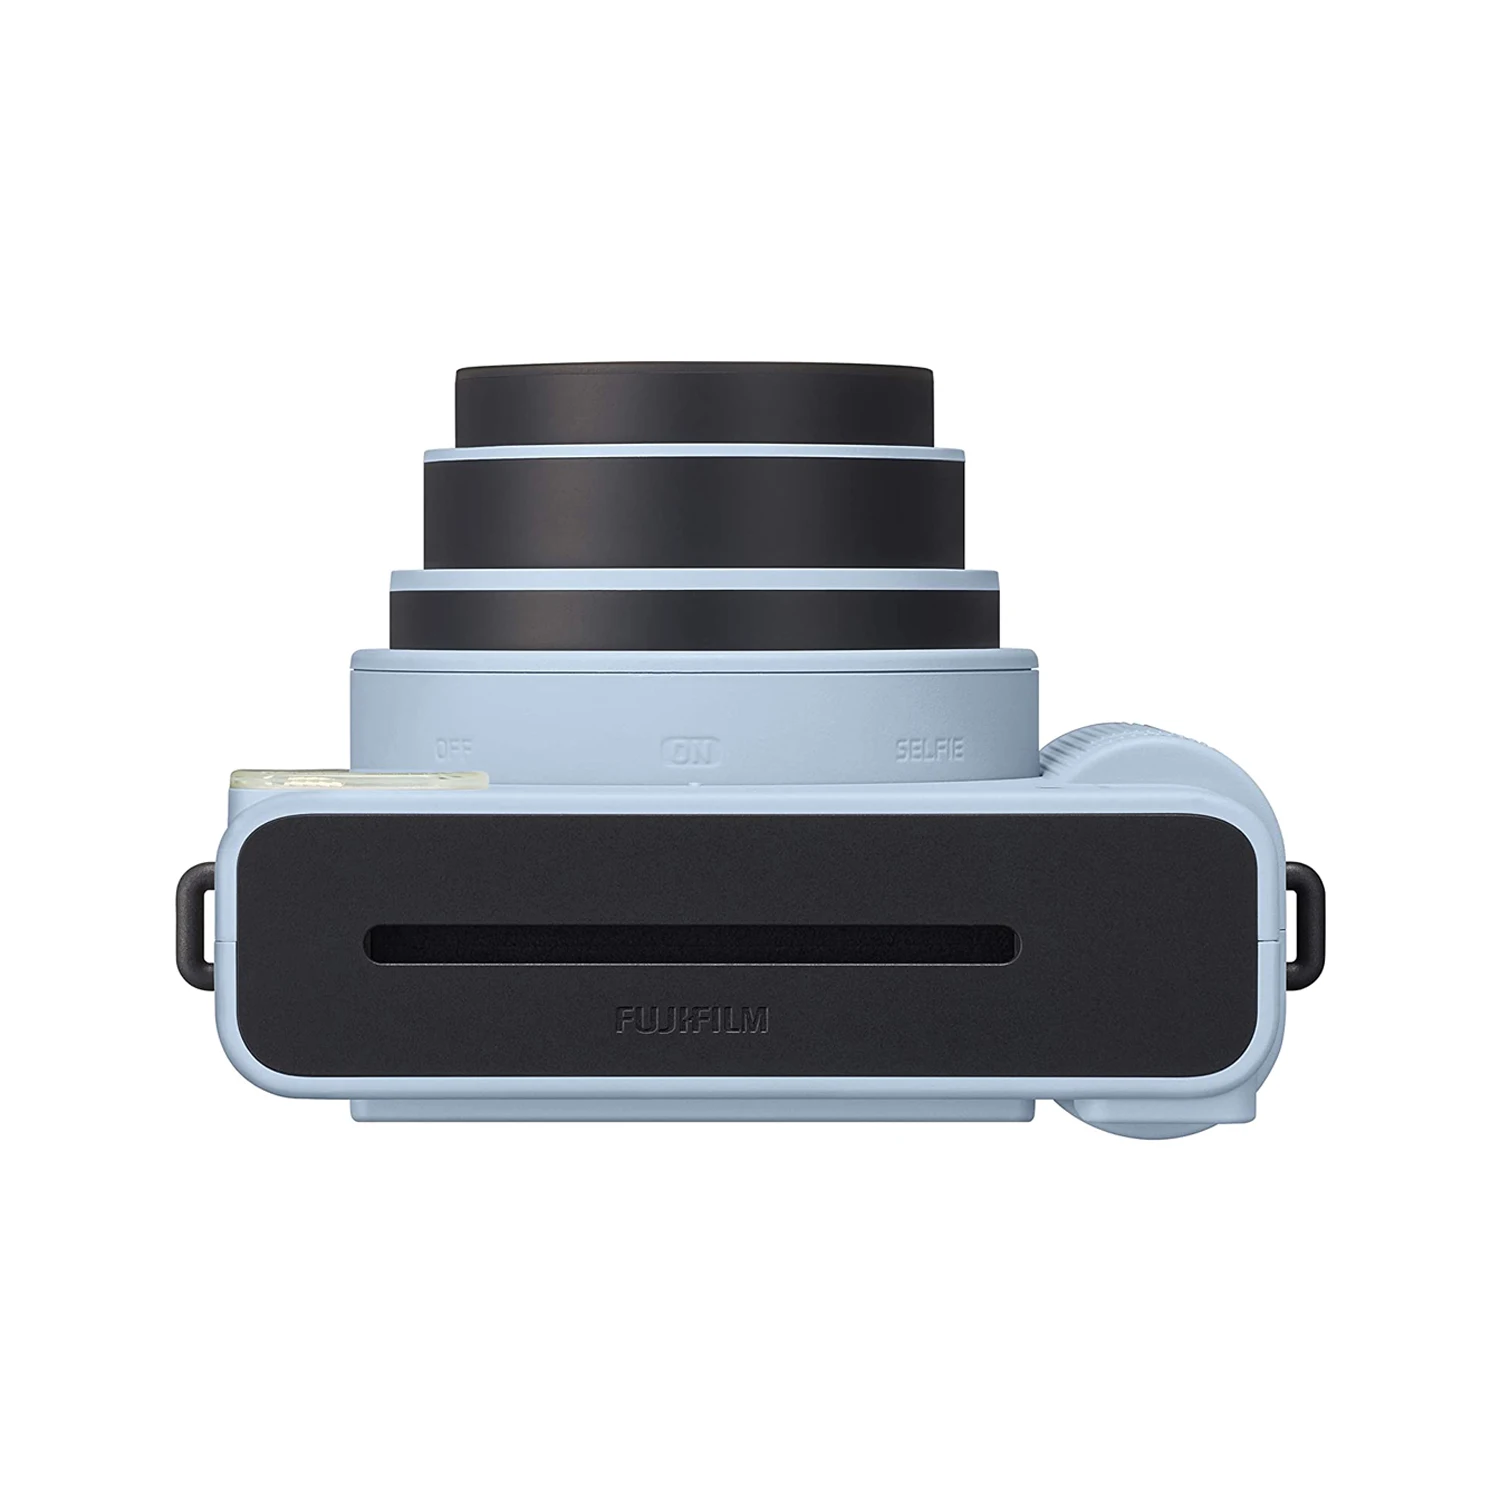 2020 Latest Fujifilm Instax SQ1 Camera Square Film InstantCamera